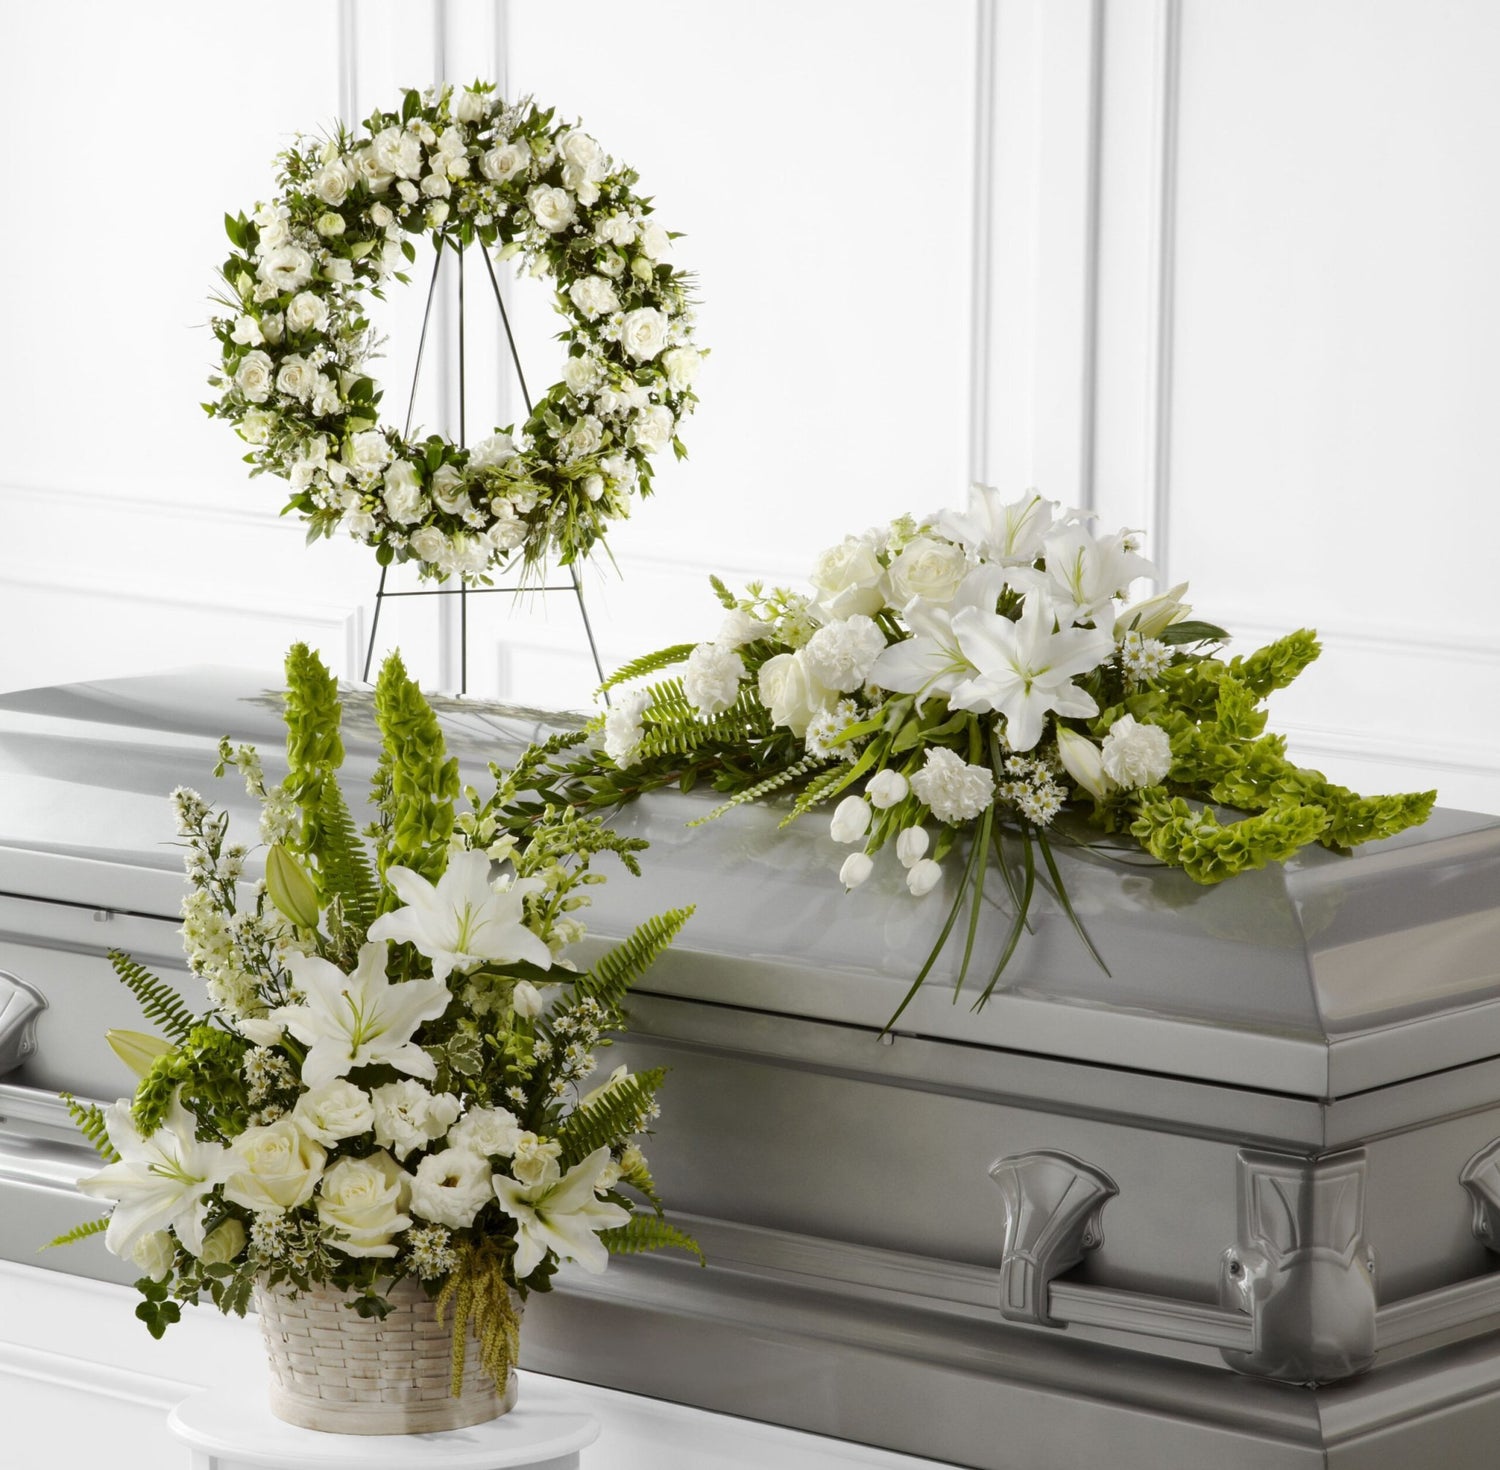 Funeral Fruit & Floral Baskets - Queens Flower Delivery